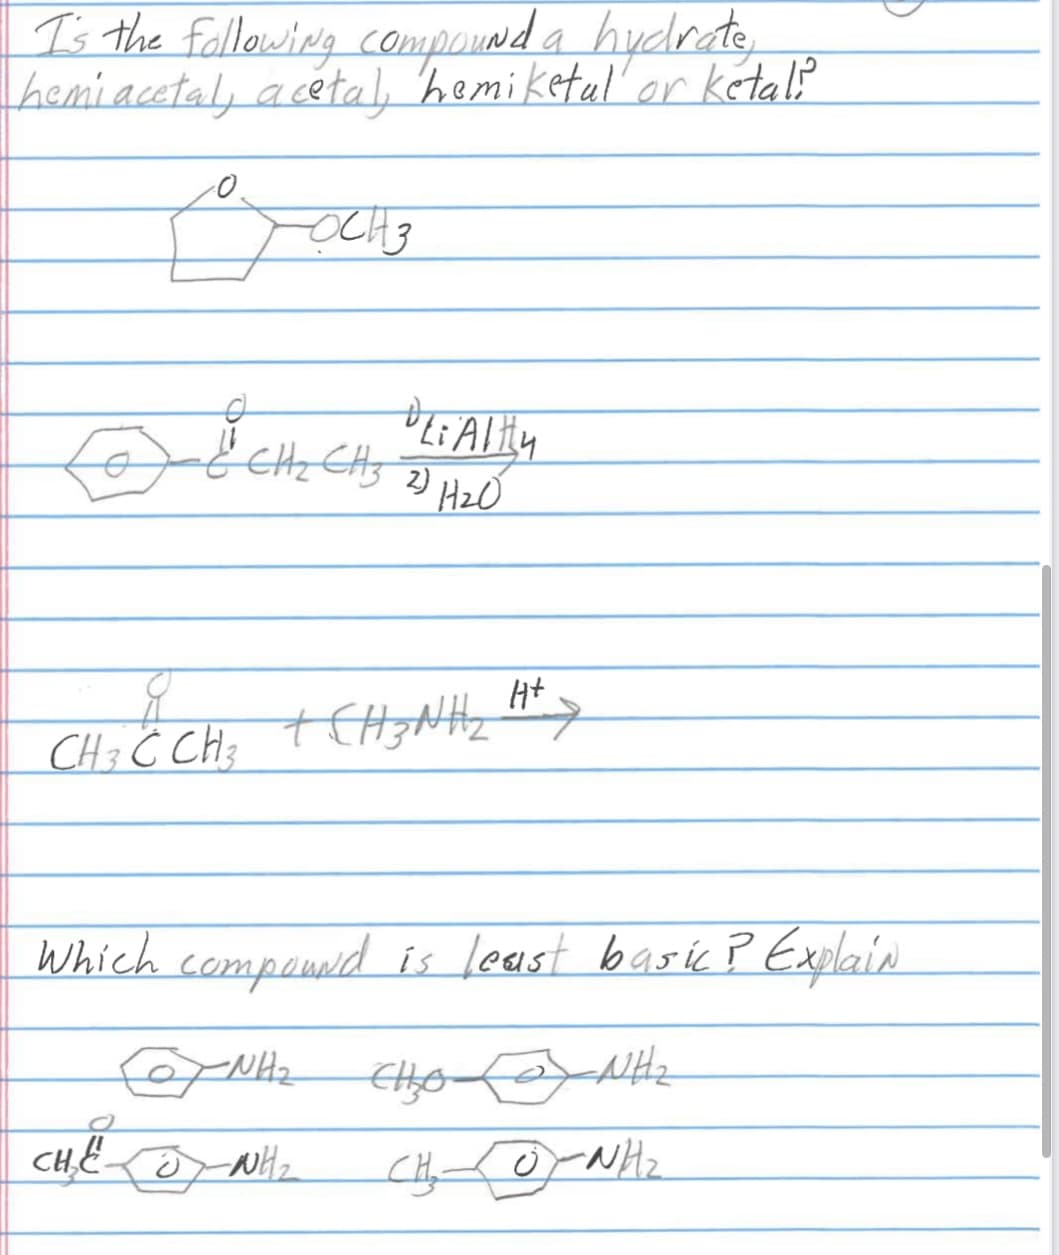 I's the following compound a hydrate,
hemiacetal, acetal, hemiketal or ketali
OCH 3
& CH₂CH₂ LiAlity
& CH₂ CH3 2) H₂0
CHÍCH CHINH HA
+ H+ >
3
Which compound is least basic ? Explain
-NH₂
-NH₂
O
CHE WH₂
Ello
CHO NH